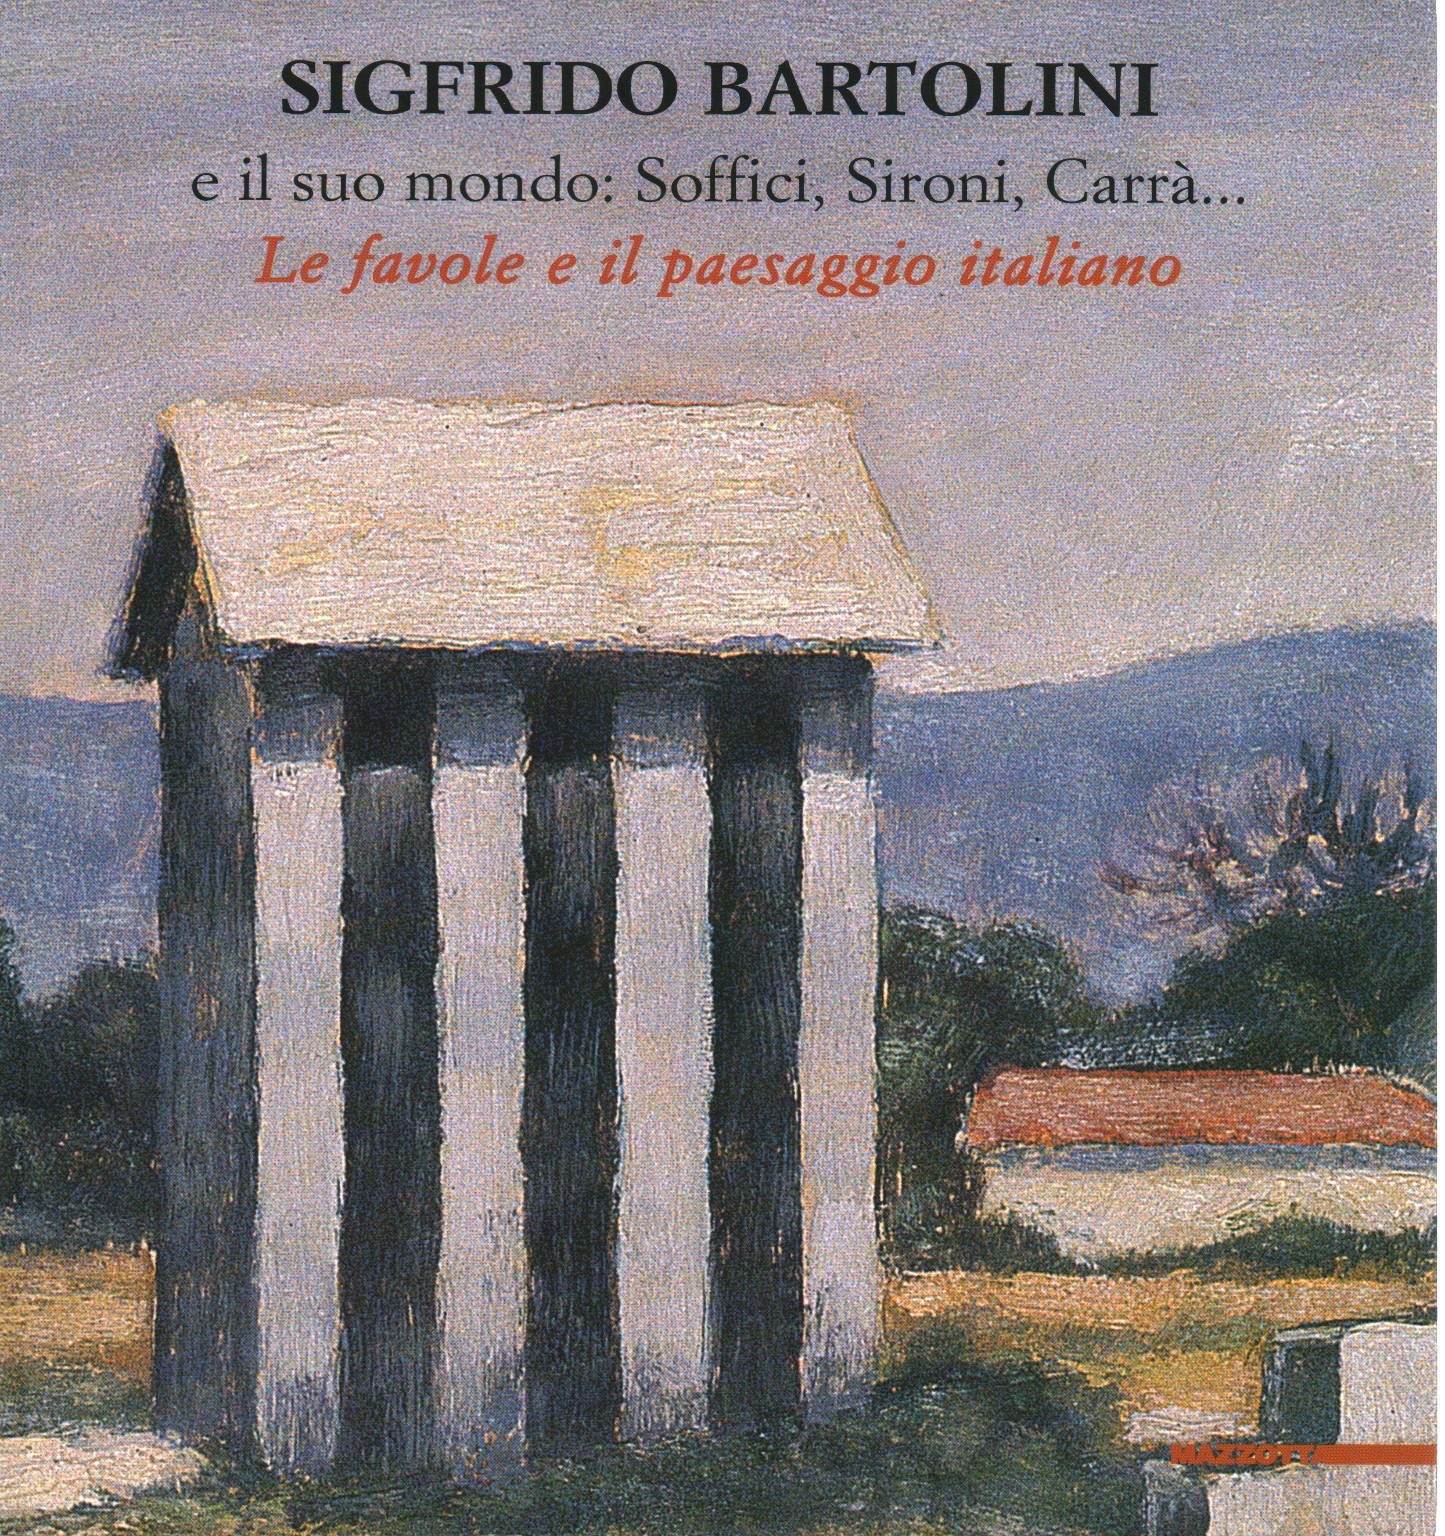 Sigfrido Bartolini et son monde: Soffici, Sironi, Elena Pontiggia